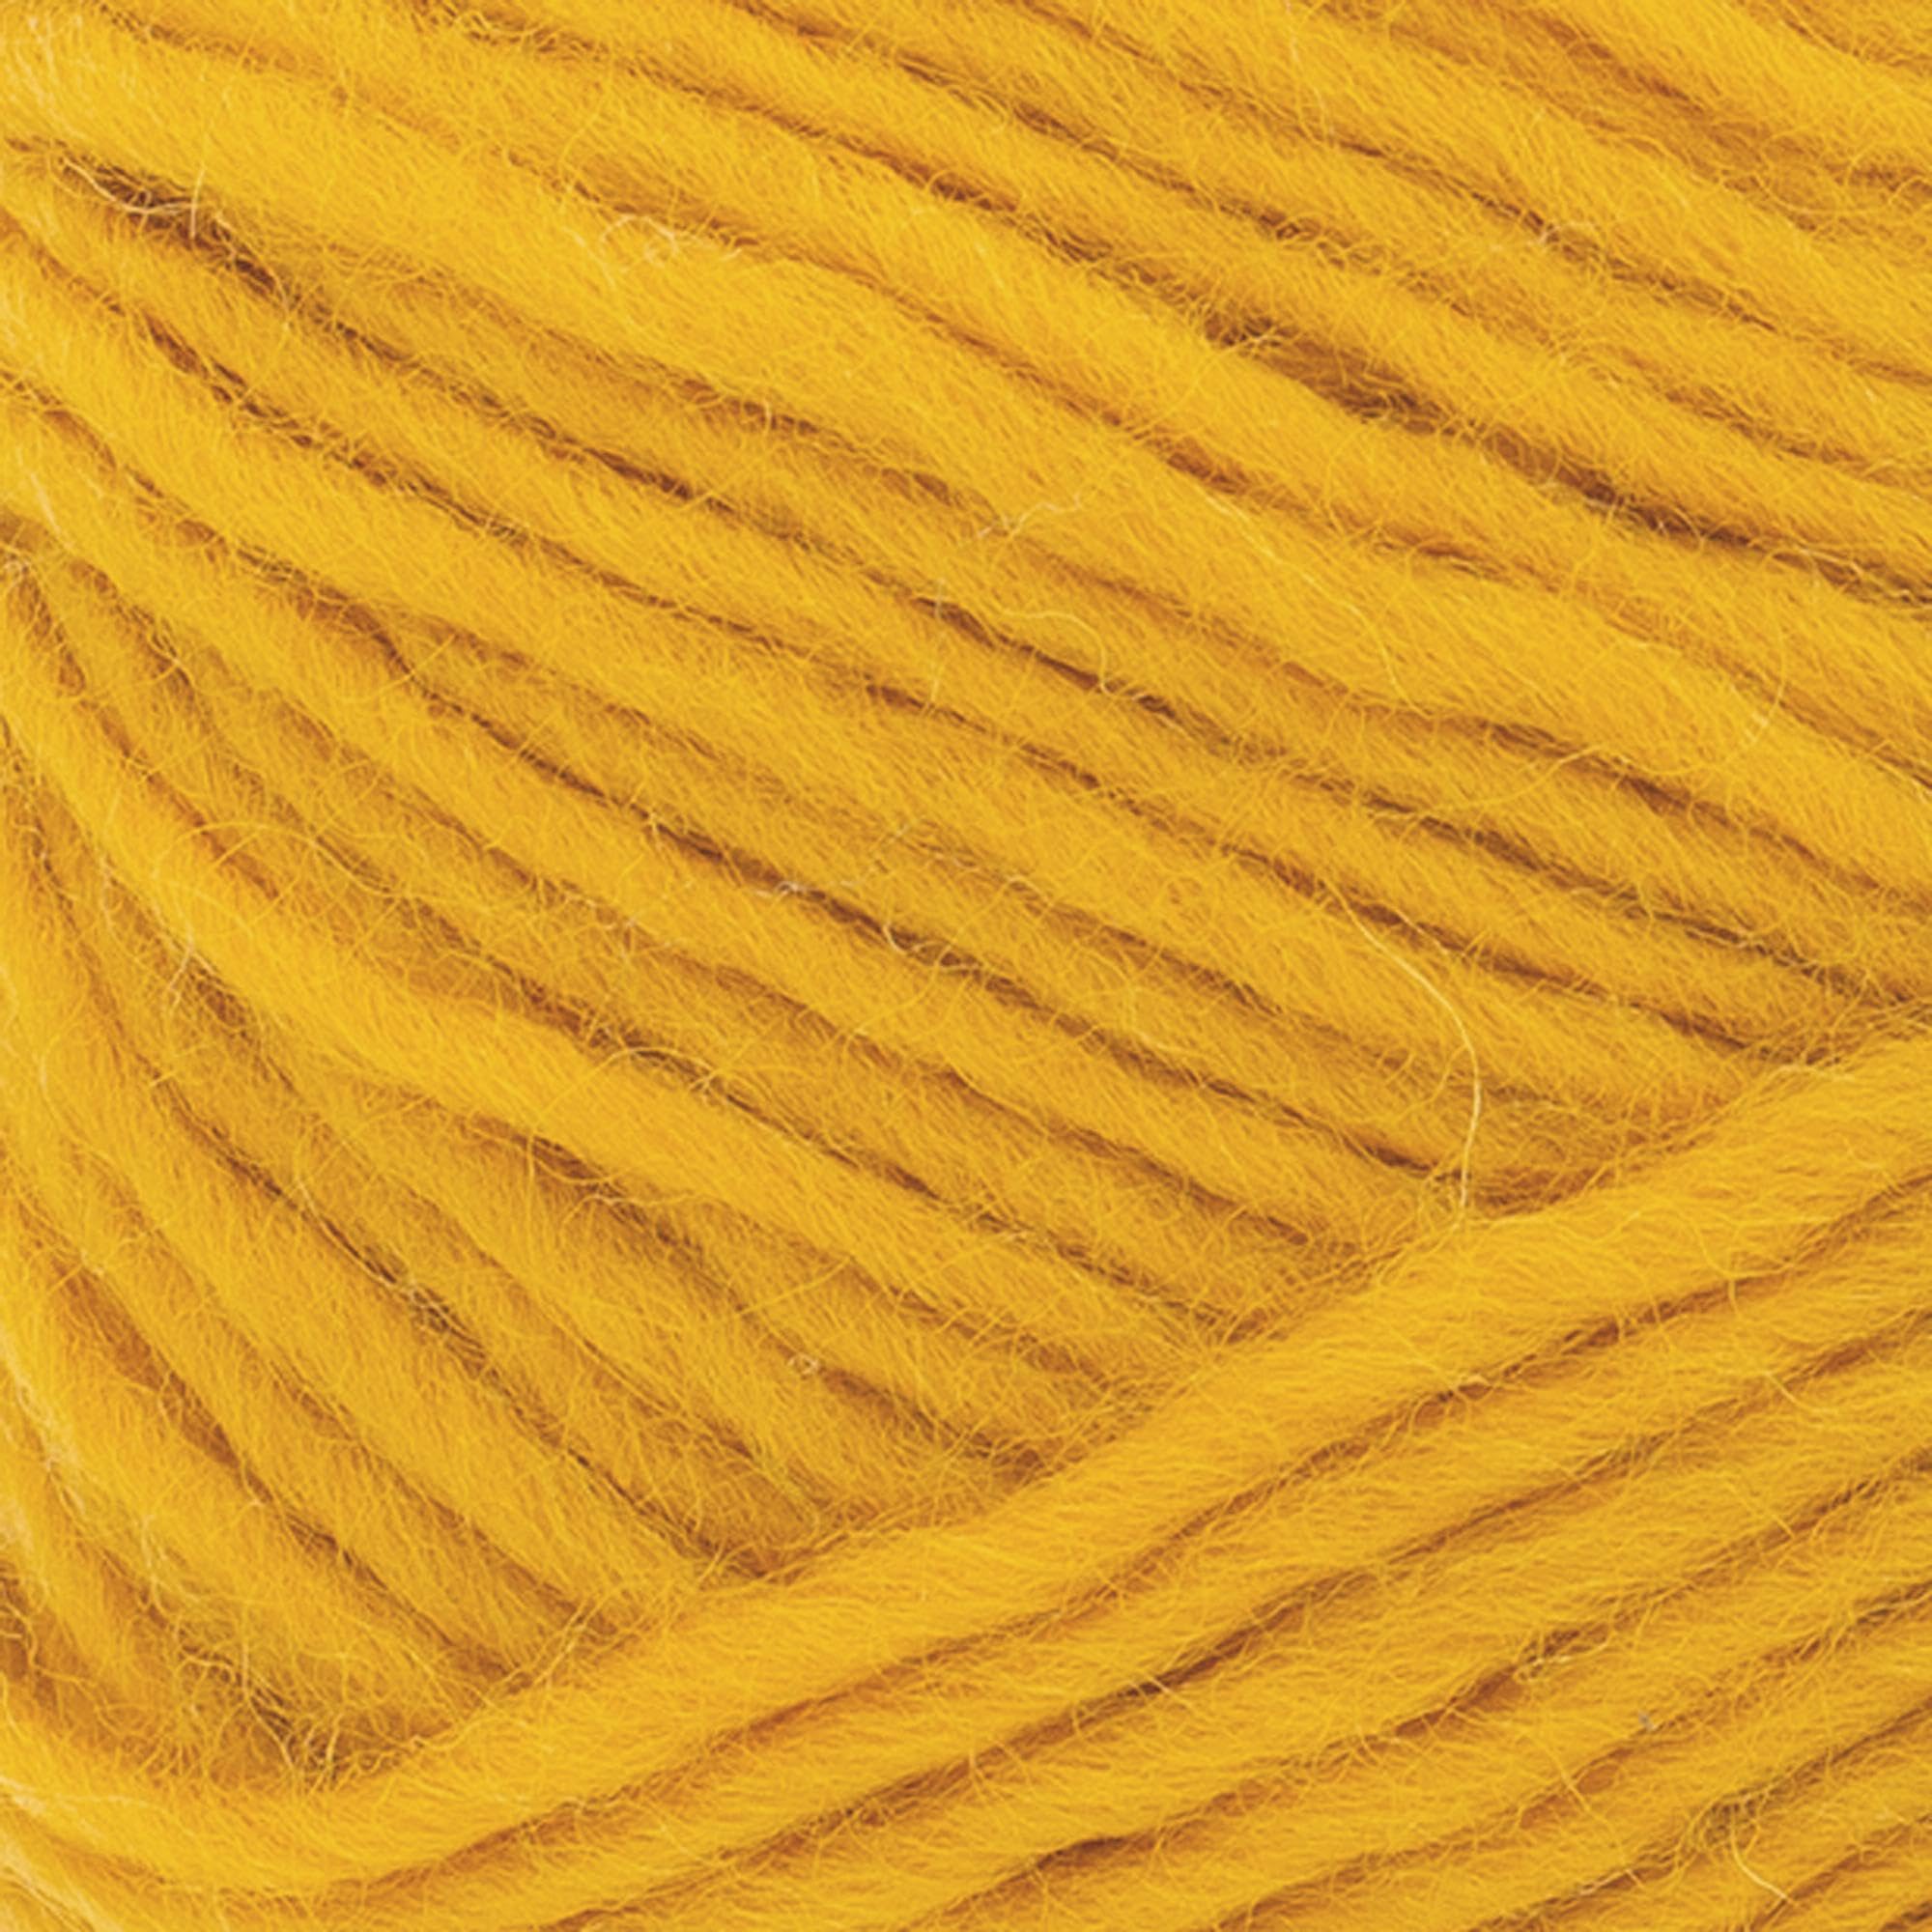 Lion Brand Yarn Wool-Ease Roving Origins Yarn, Goldenrod